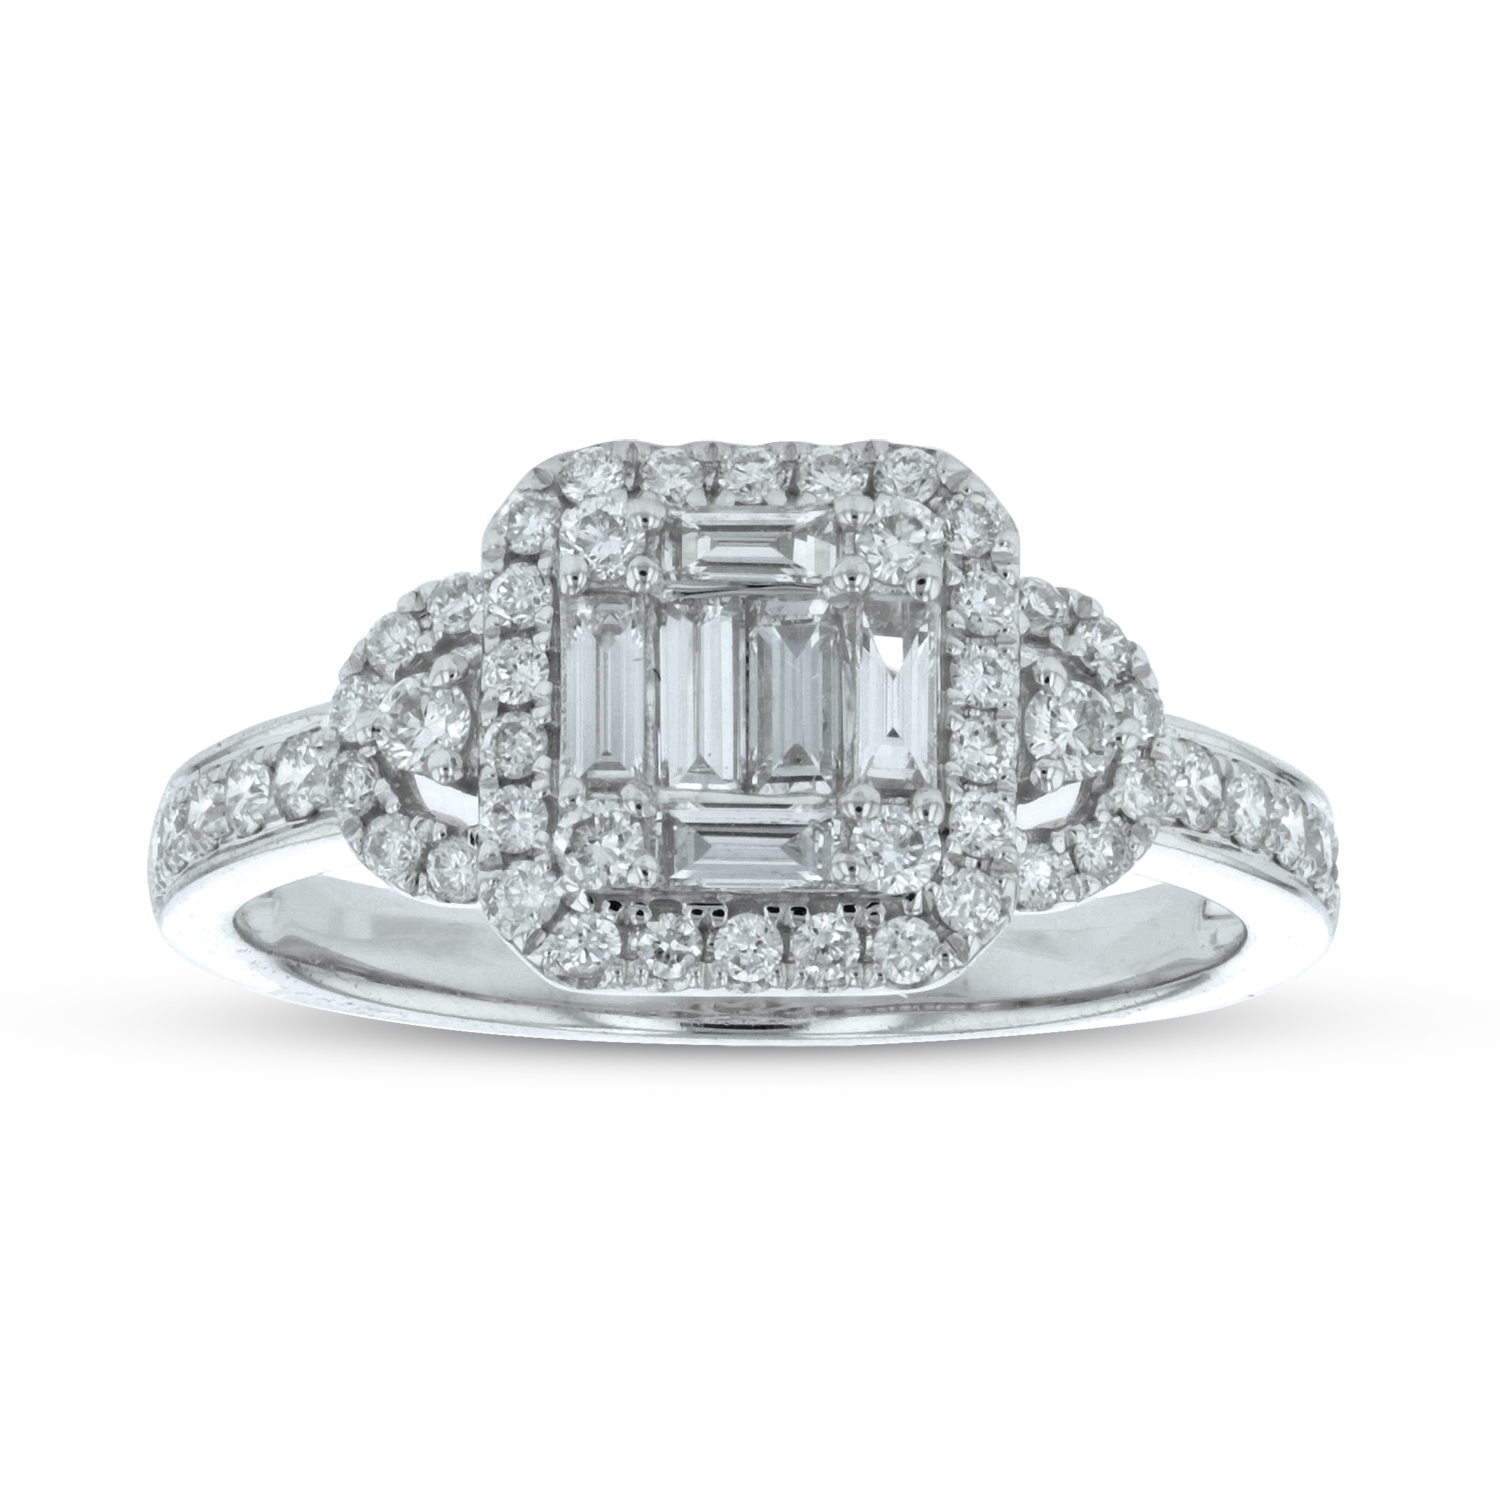 View 0.67ctw Diamond Fashion Ring in 18k White Gold